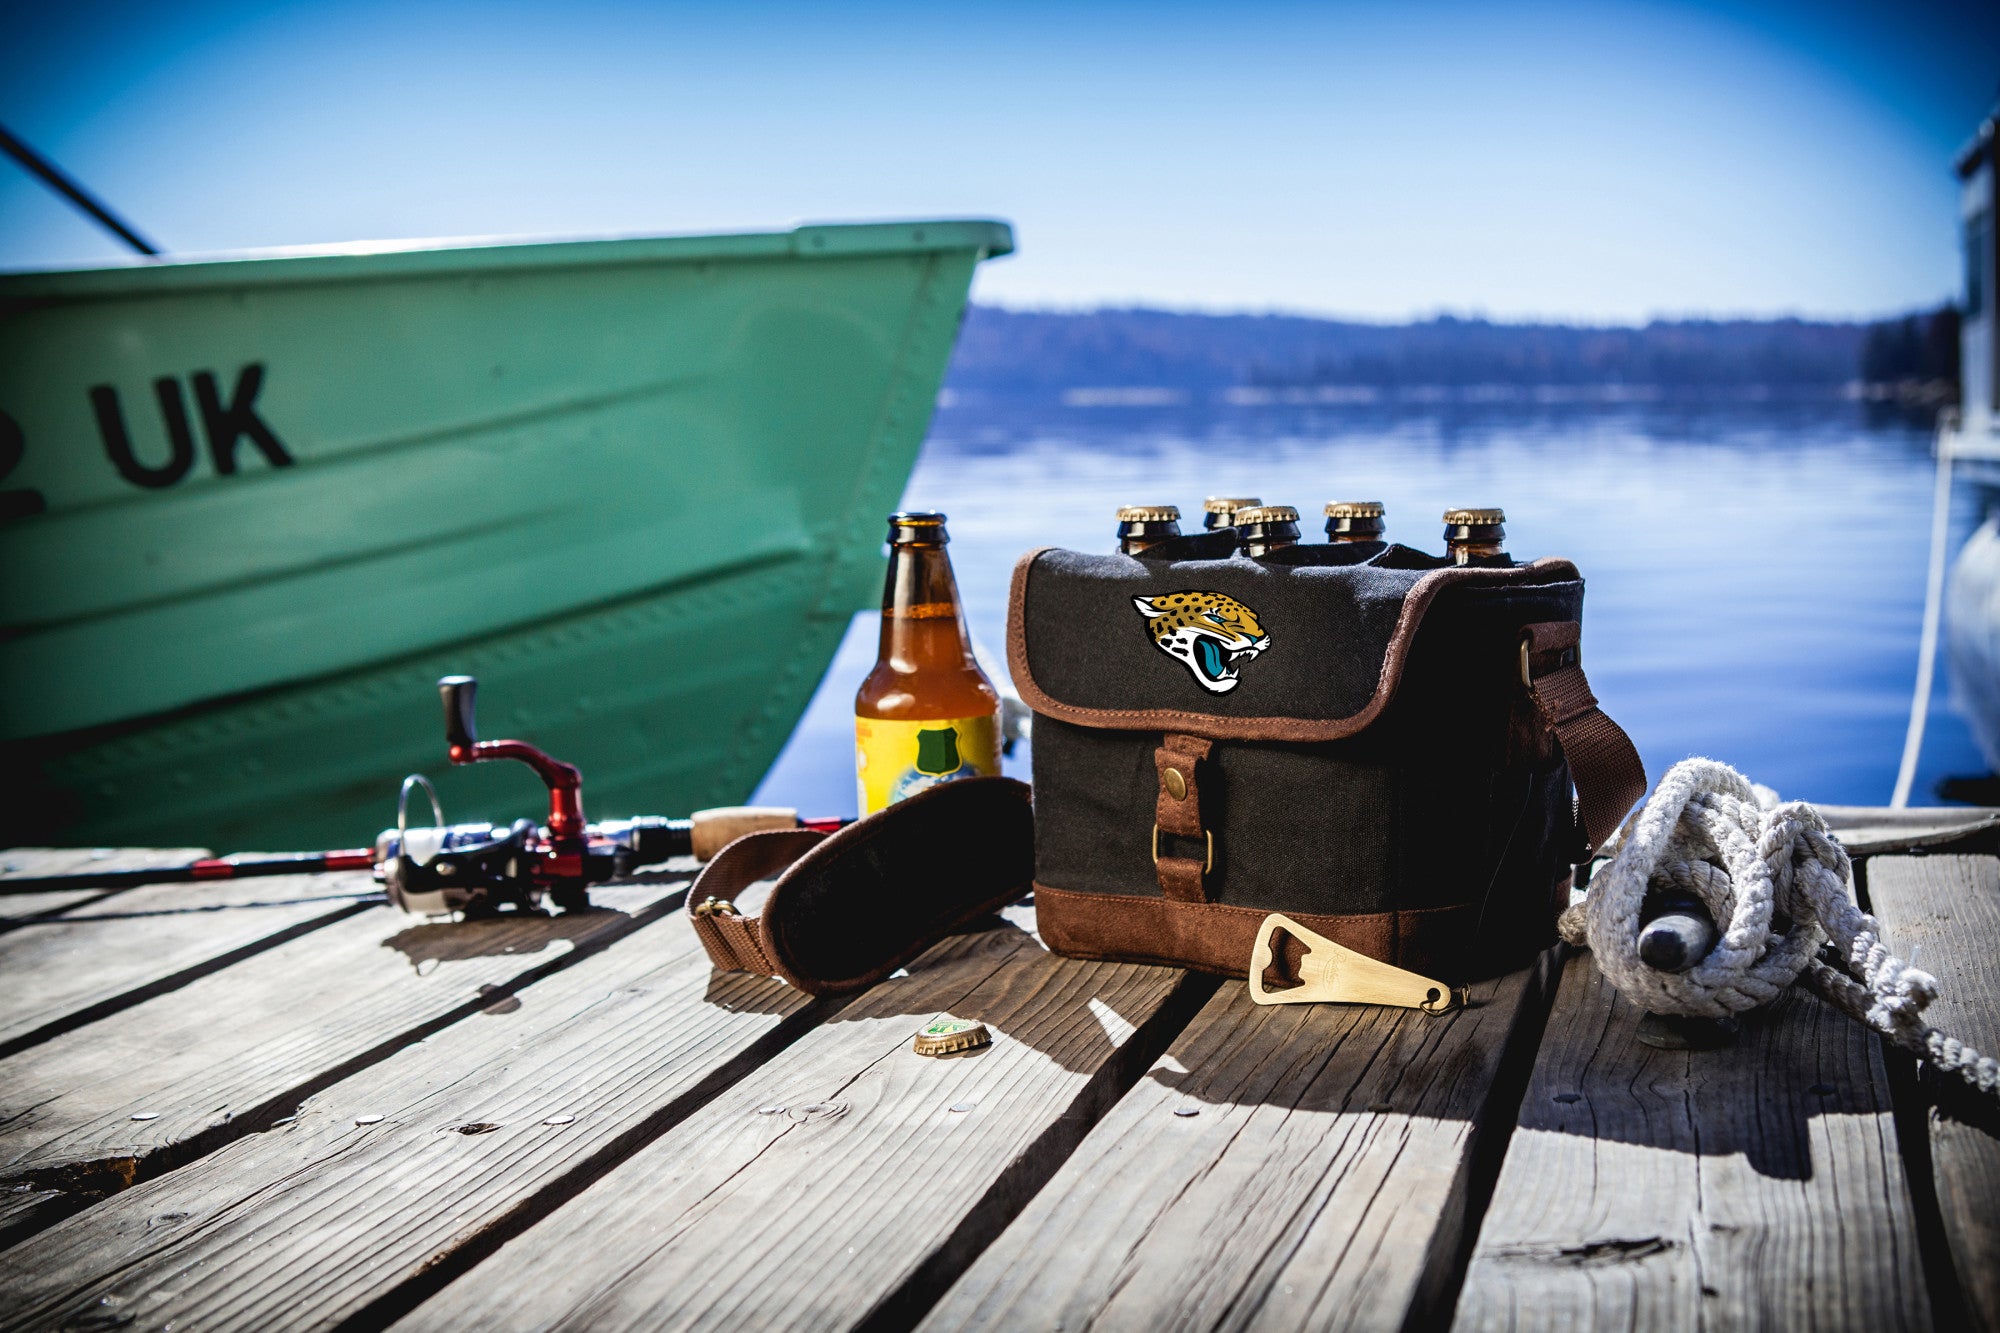 Jacksonville Jaguars - Beer Caddy Cooler Tote with Opener